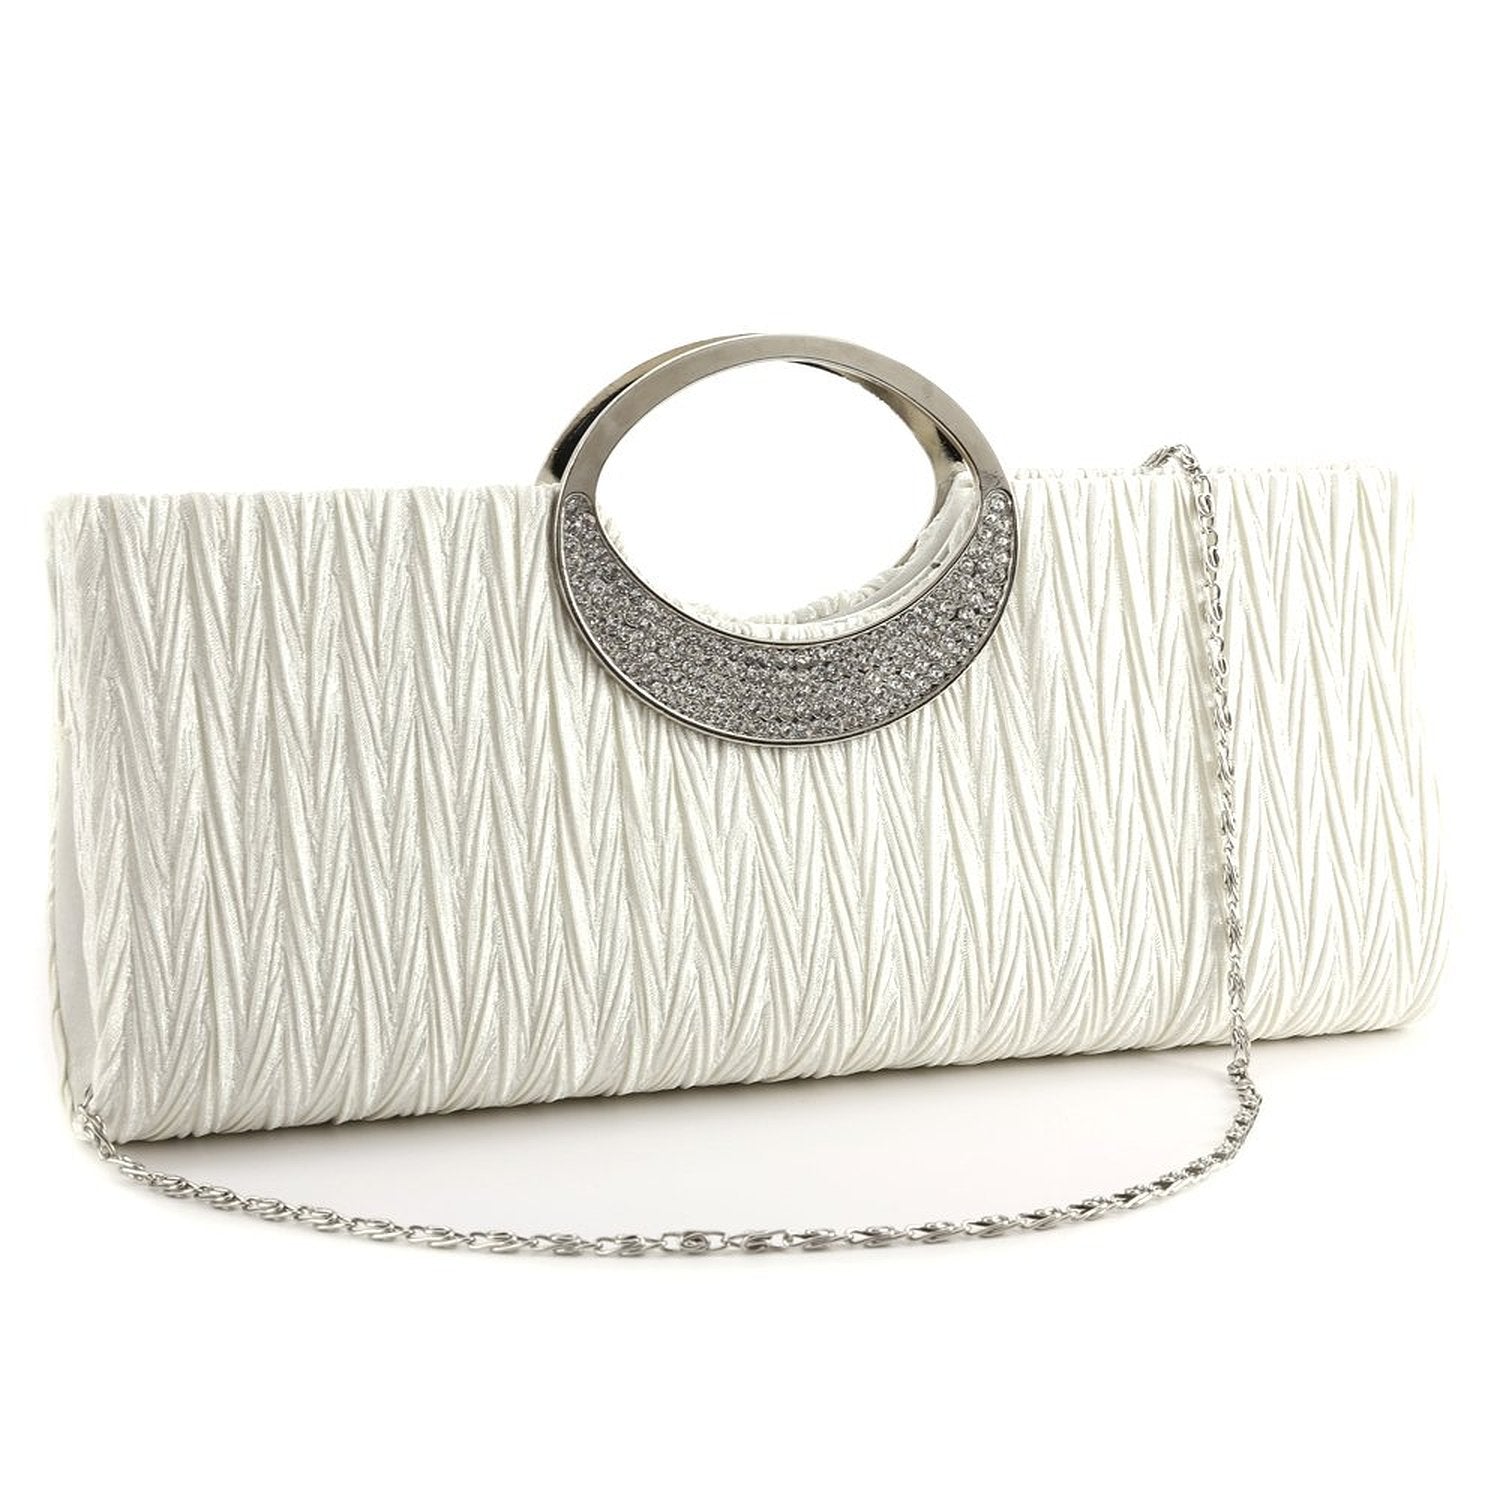 Woman's evening bag elegant diamond satin handbag new white - ebowsos